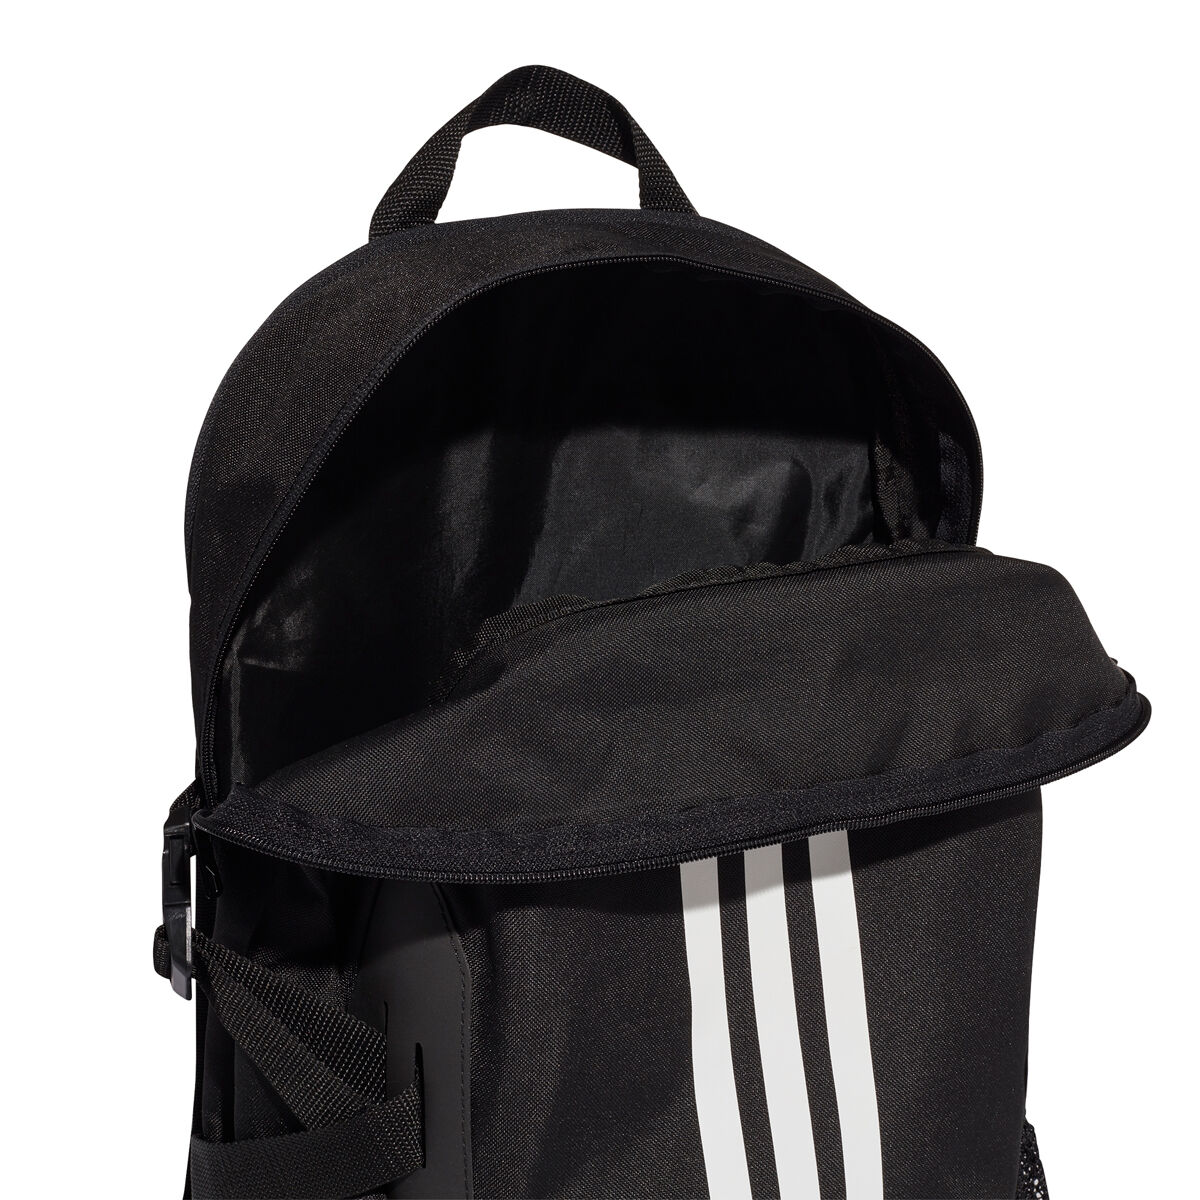 rebel adidas backpack